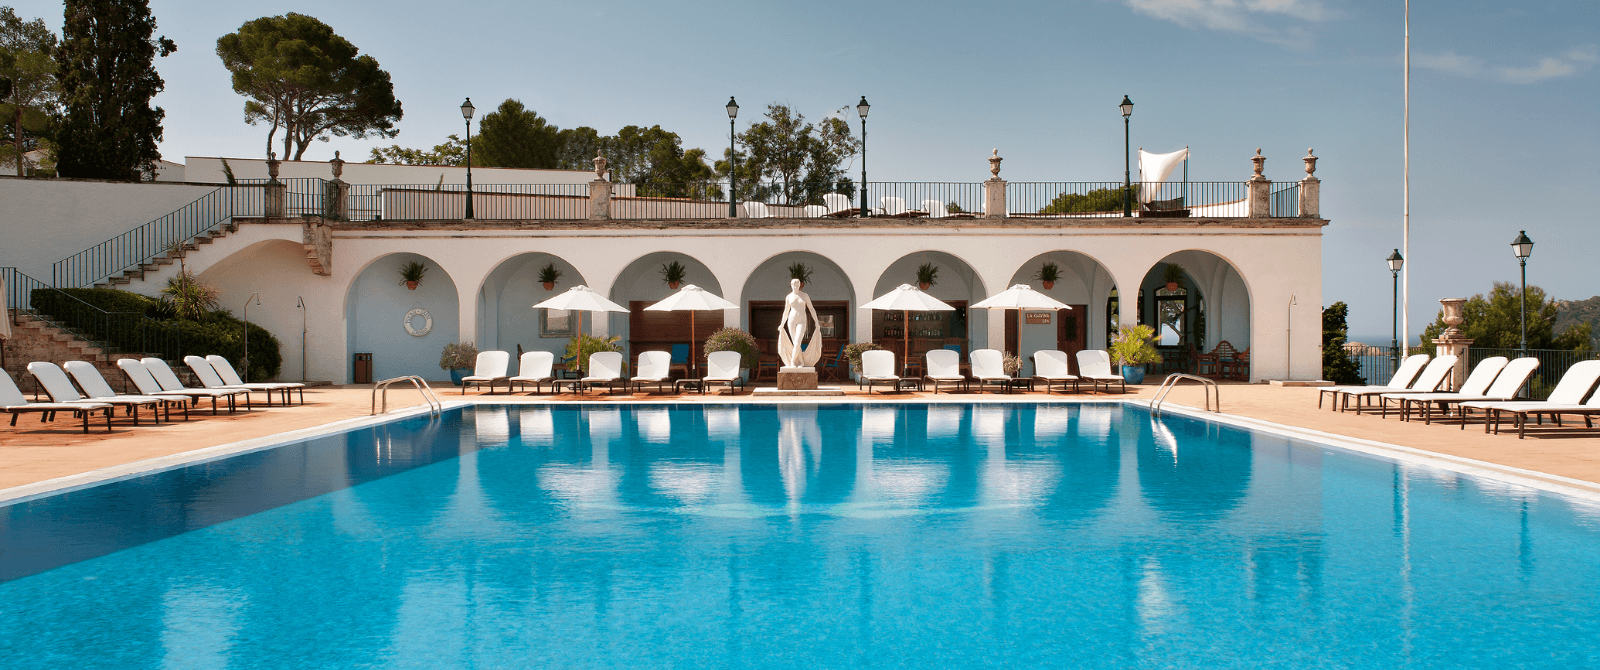 The pool at Hotel La Gavina